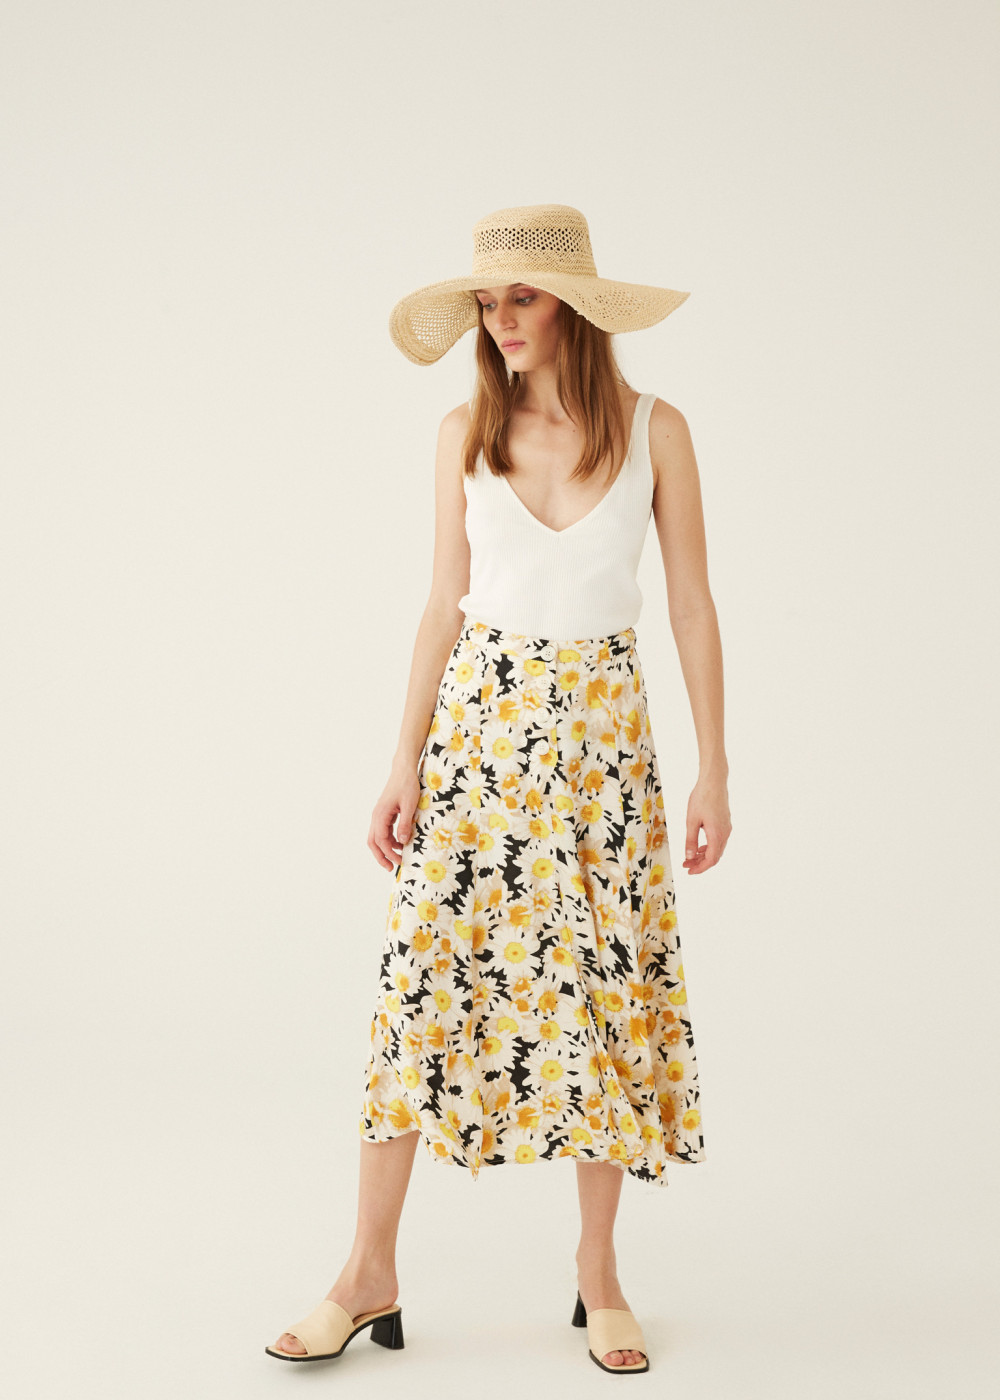 Daisy Patterned Skirt